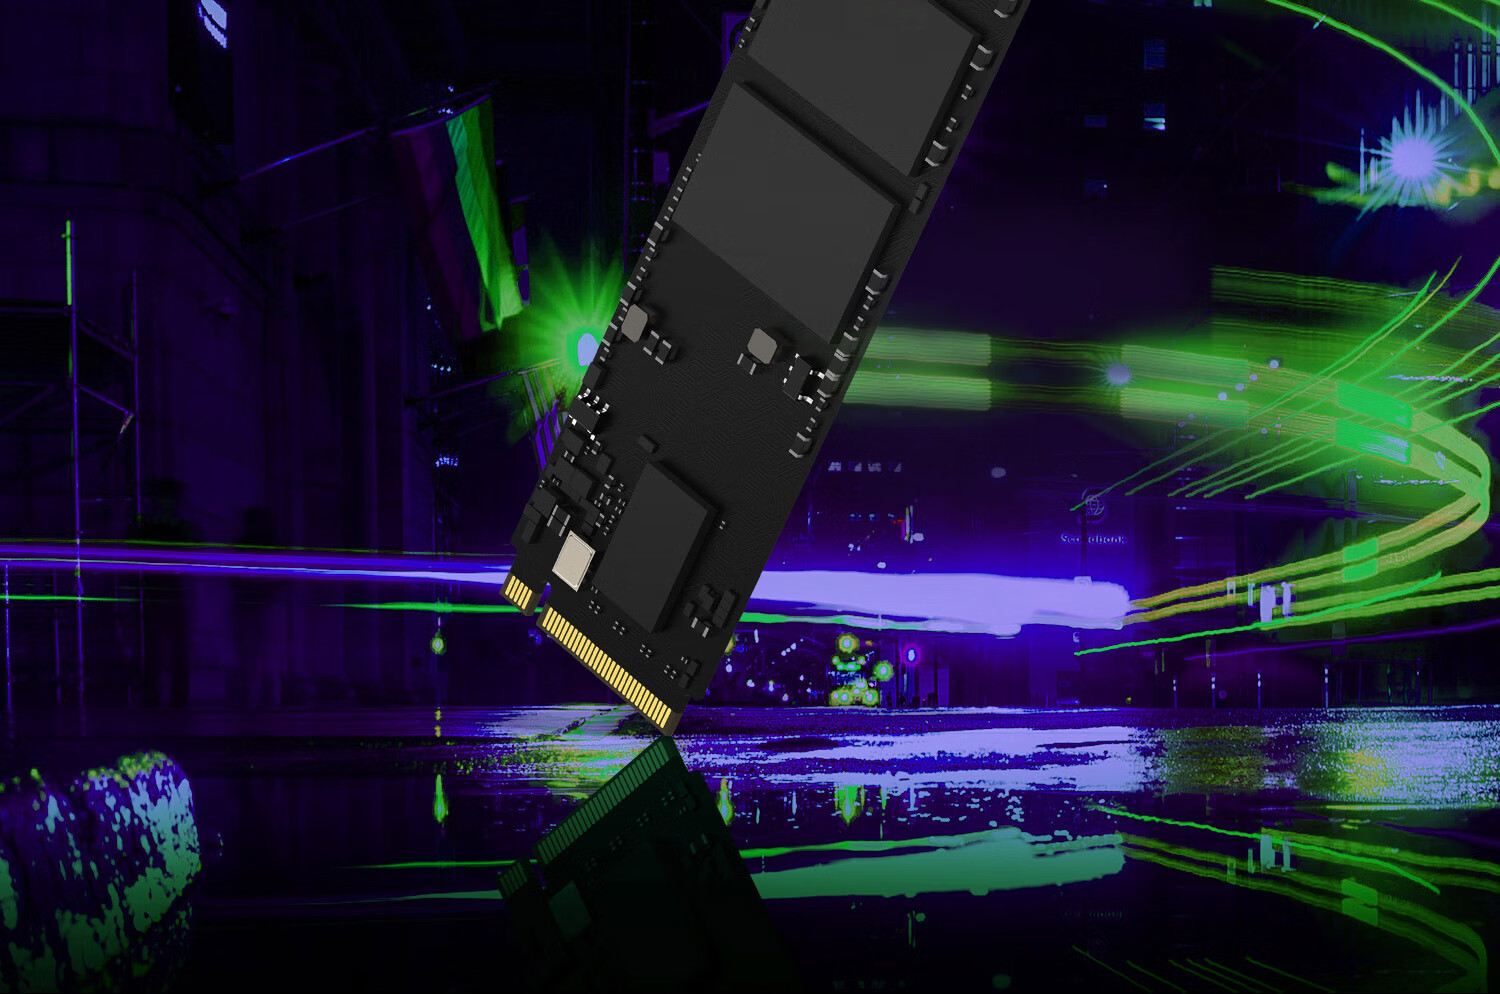 海康威视（HIKVISION）1TB SSD固态硬盘 M.2接口(NVMe协议PCIe 4.0 x4) C4000ECO系列